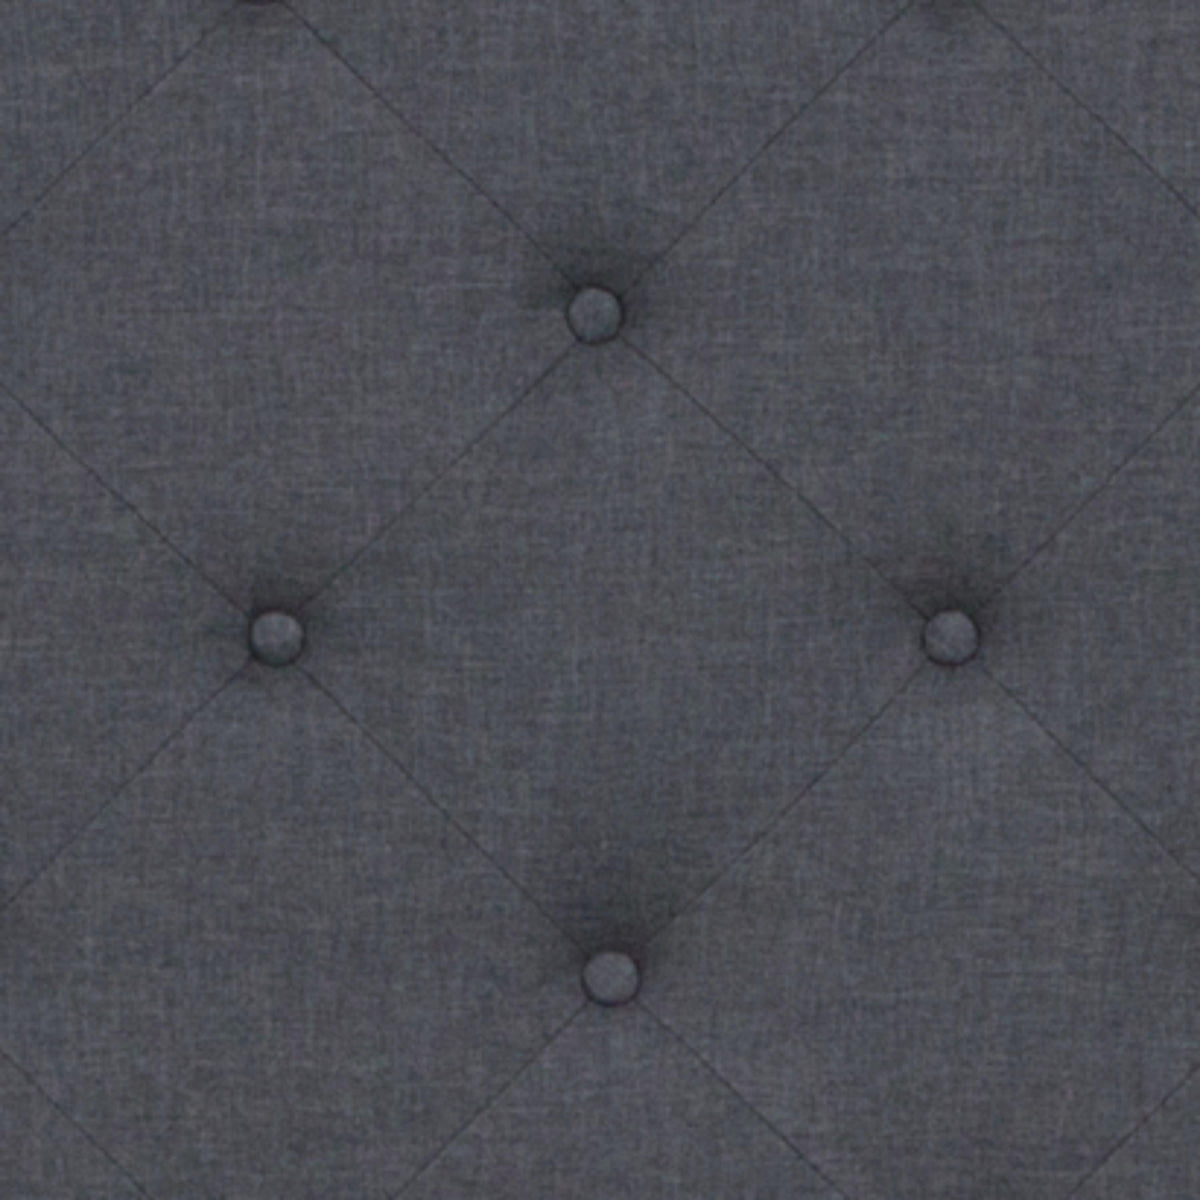 Dark Gray,Queen |#| Queen Size Arched Tufted Dark Gray Fabric Platform Bed with Memory Foam Mattress